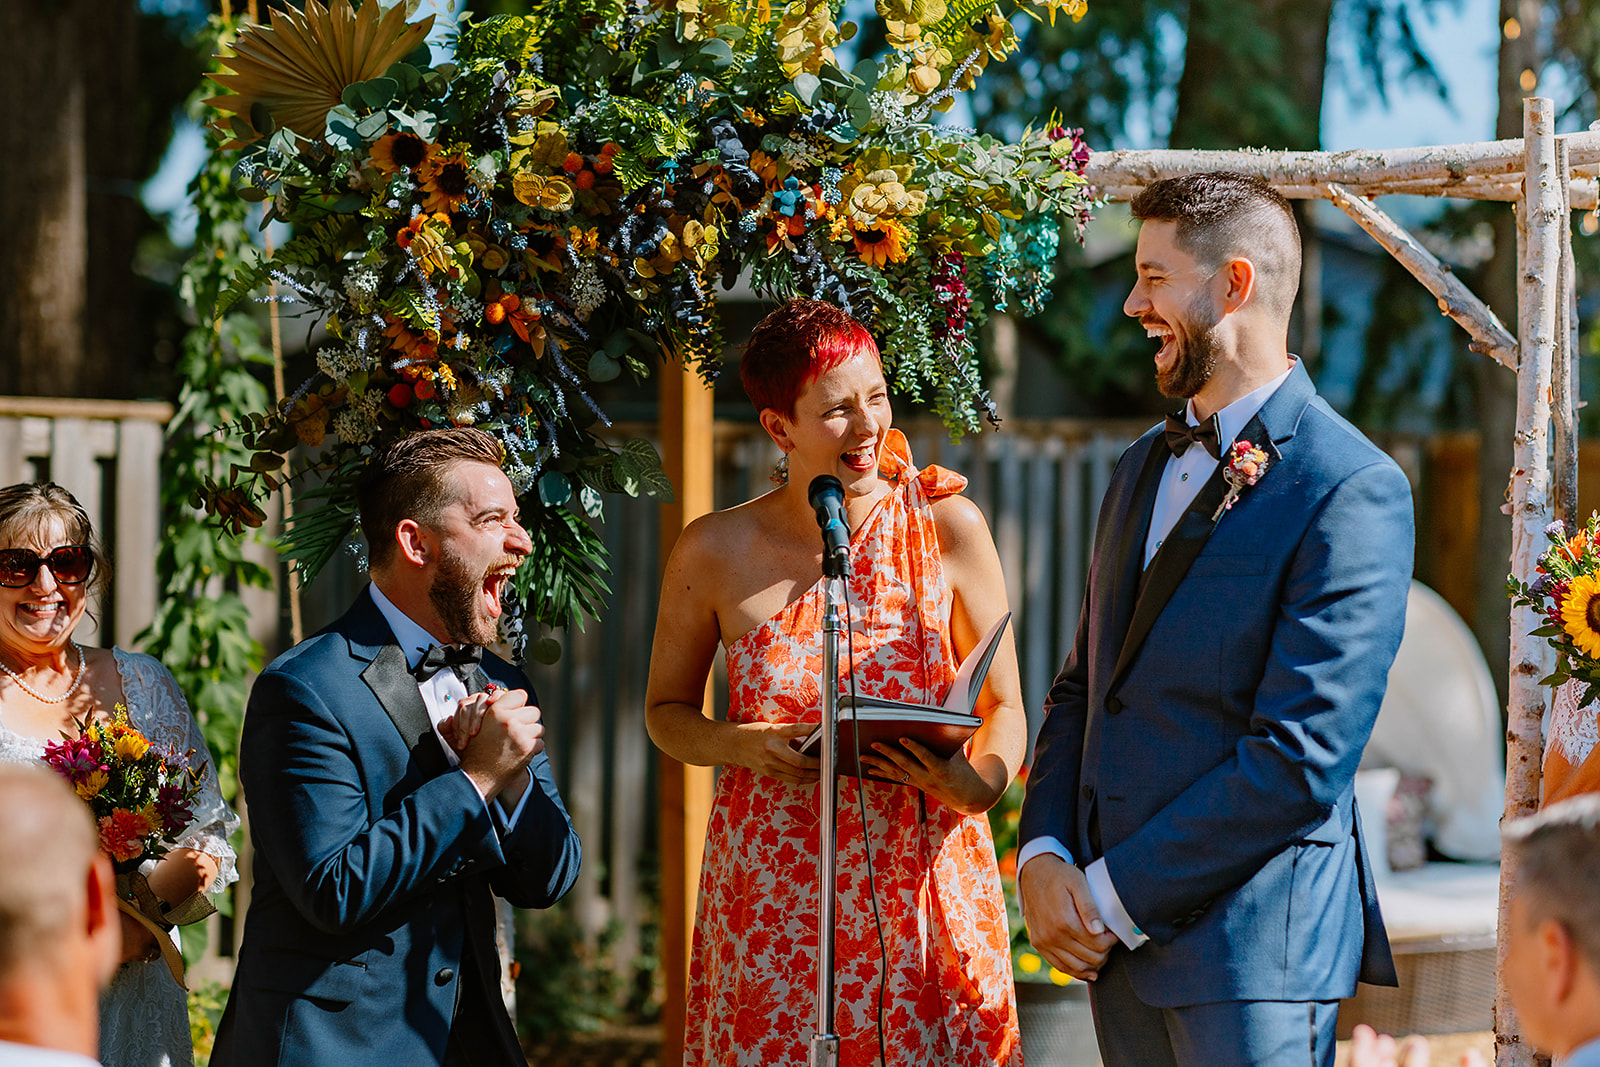 Gay couple elopes in Oregon backyard wedding 